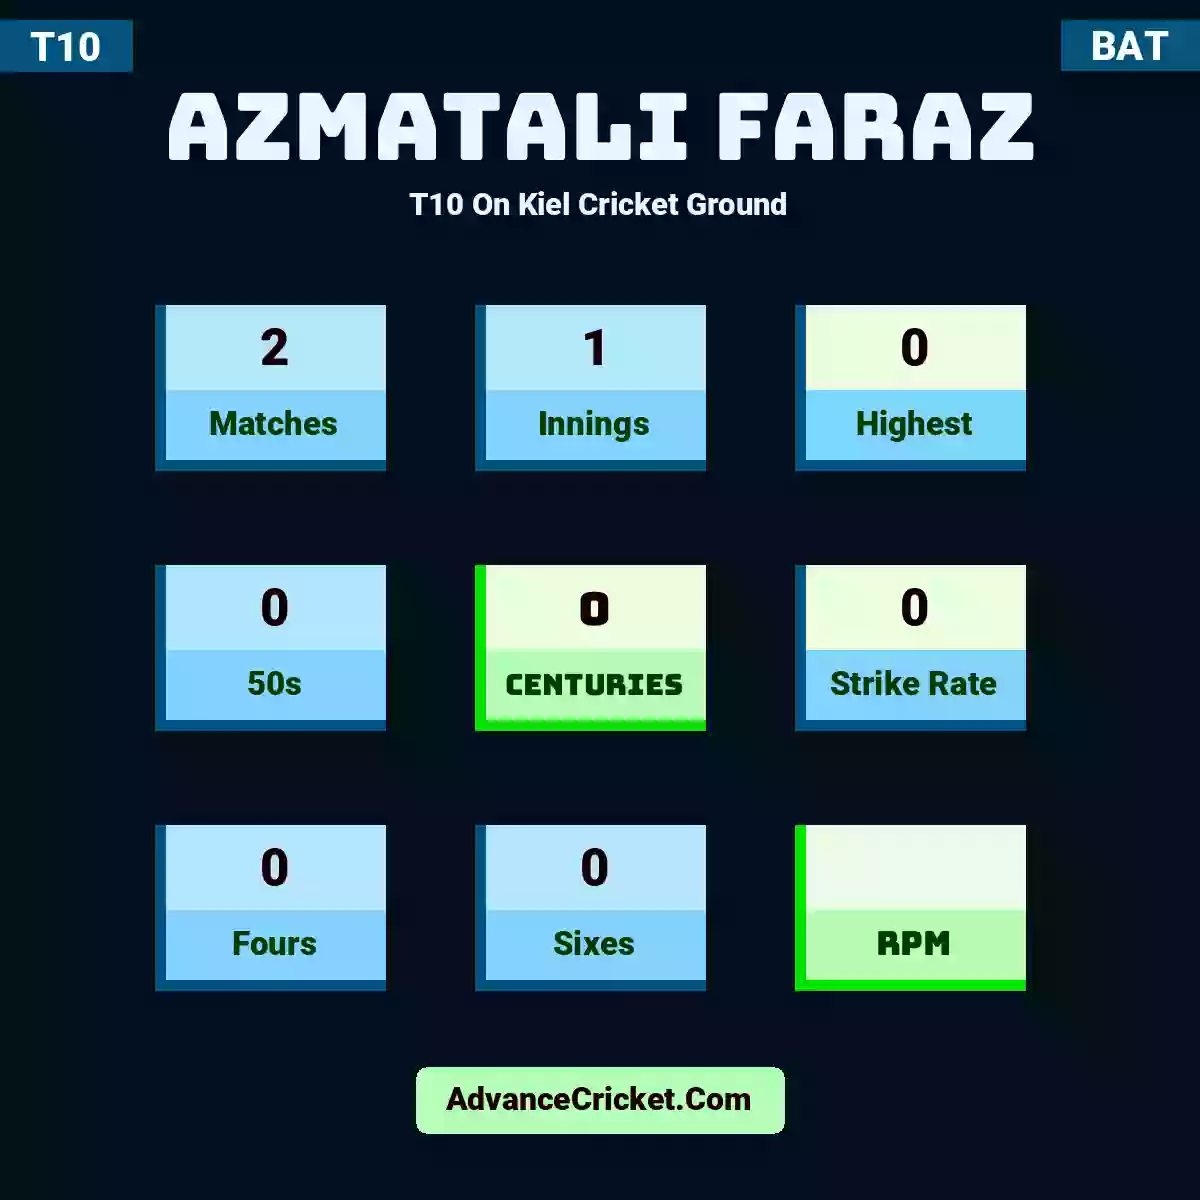 Azmatali Faraz T10  On Kiel Cricket Ground, Azmatali Faraz played 2 matches, scored 0 runs as highest, 0 half-centuries, and 0 centuries, with a strike rate of 0. A.Faraz hit 0 fours and 0 sixes.